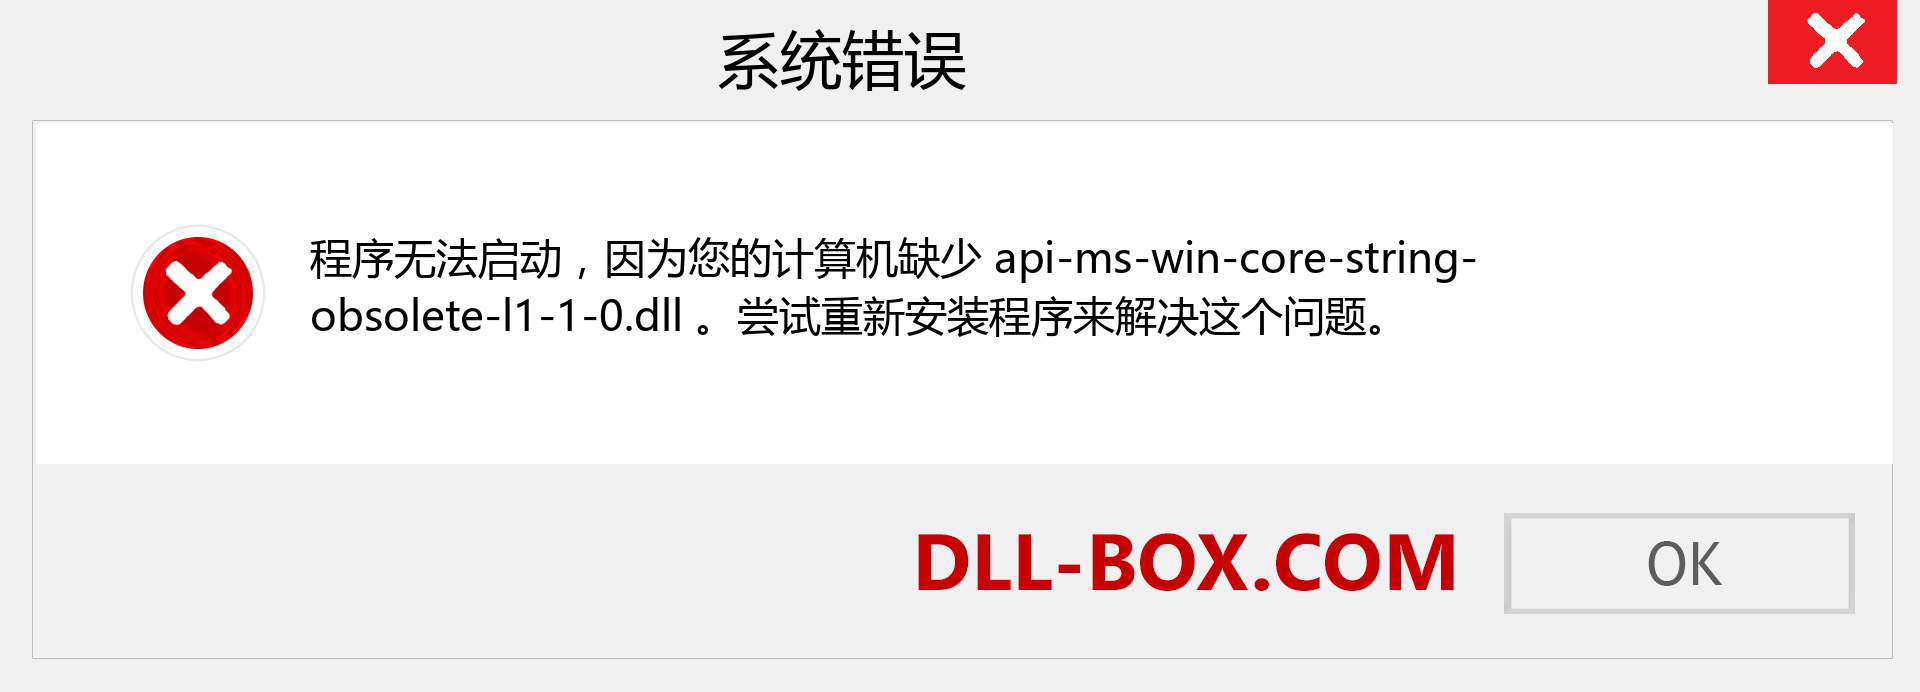 api-ms-win-core-string-obsolete-l1-1-0.dll 文件丢失？。 适用于 Windows 7、8、10 的下载 - 修复 Windows、照片、图像上的 api-ms-win-core-string-obsolete-l1-1-0 dll 丢失错误